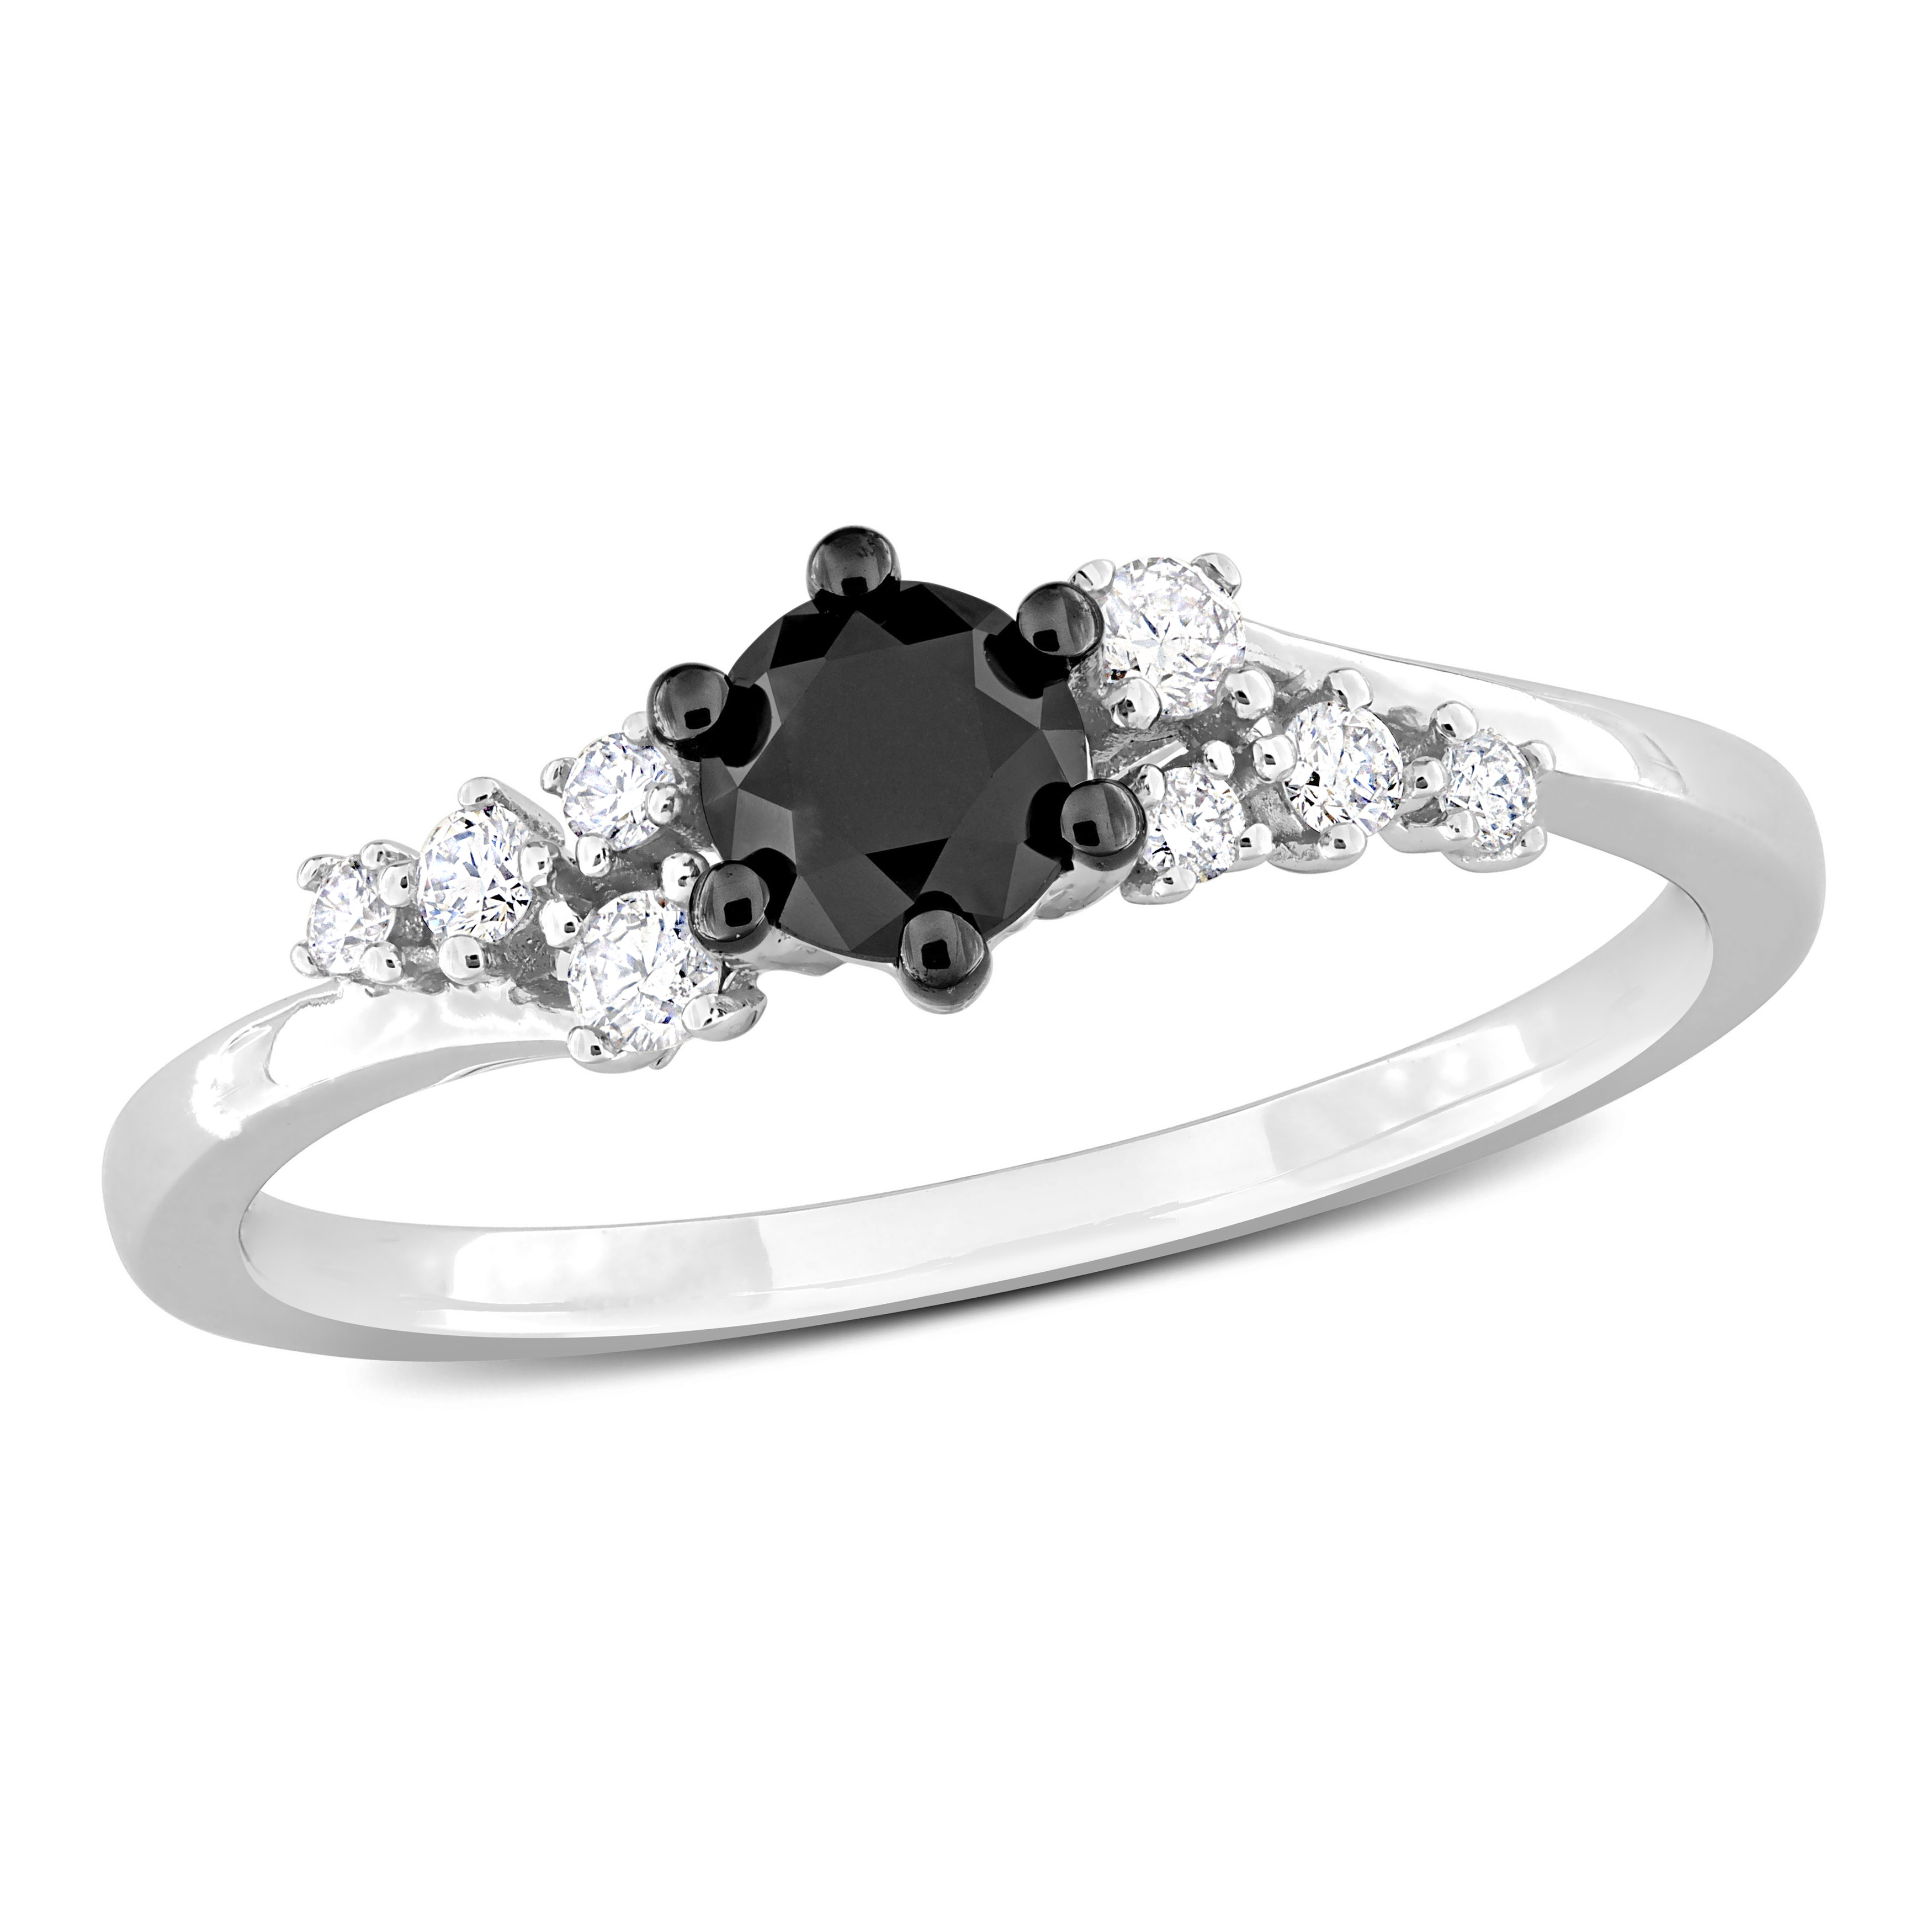 5/8 CT TDW Black and White Diamond Engagement Ring in 14k White Gold